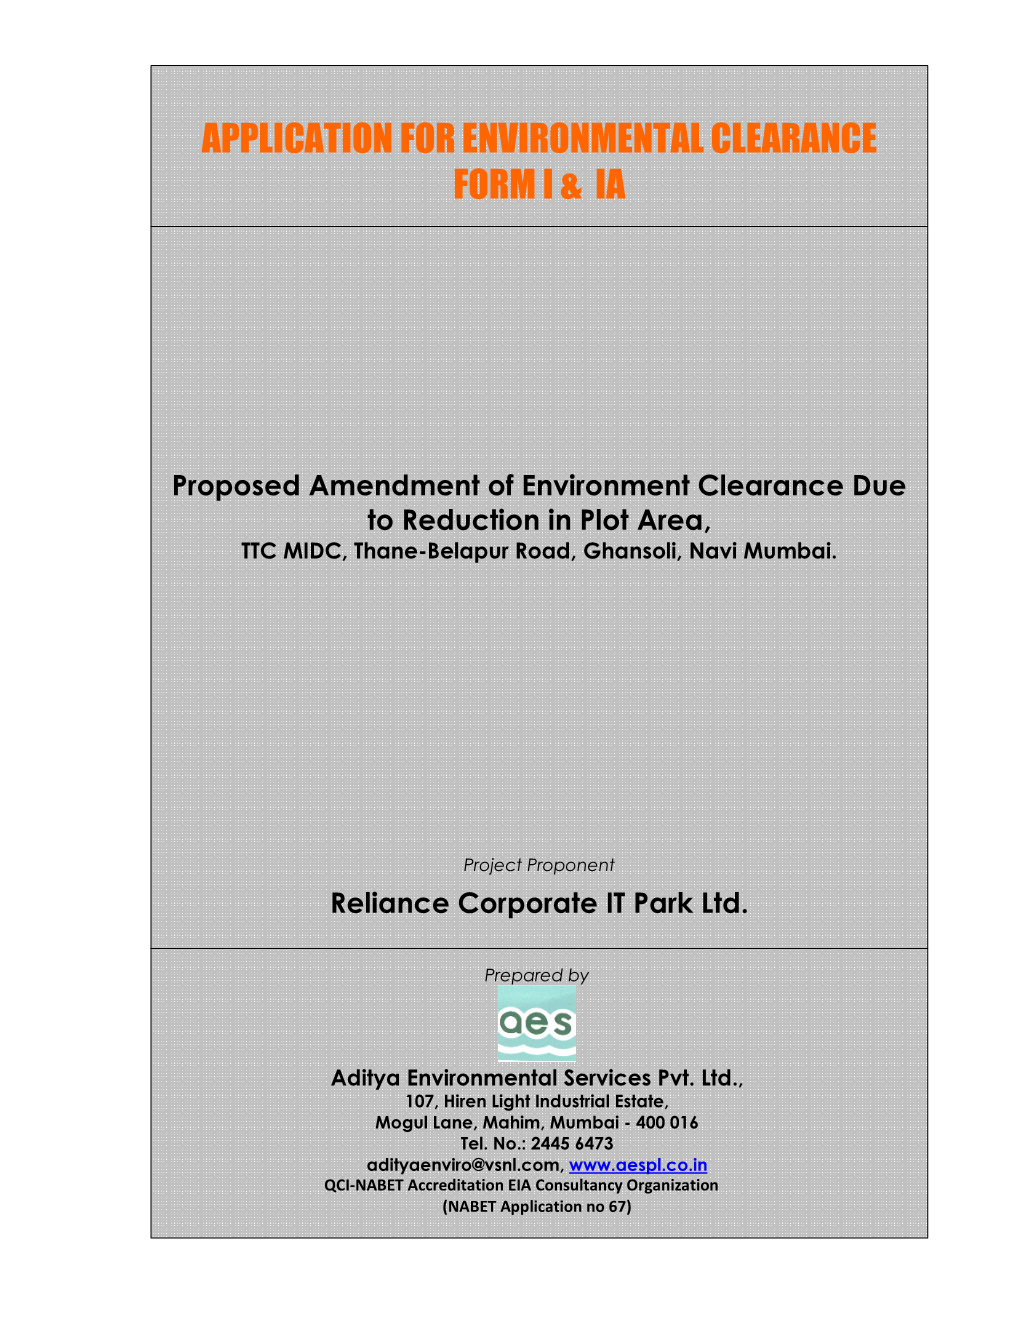 Application for Environmental Clearance Form I & Ia